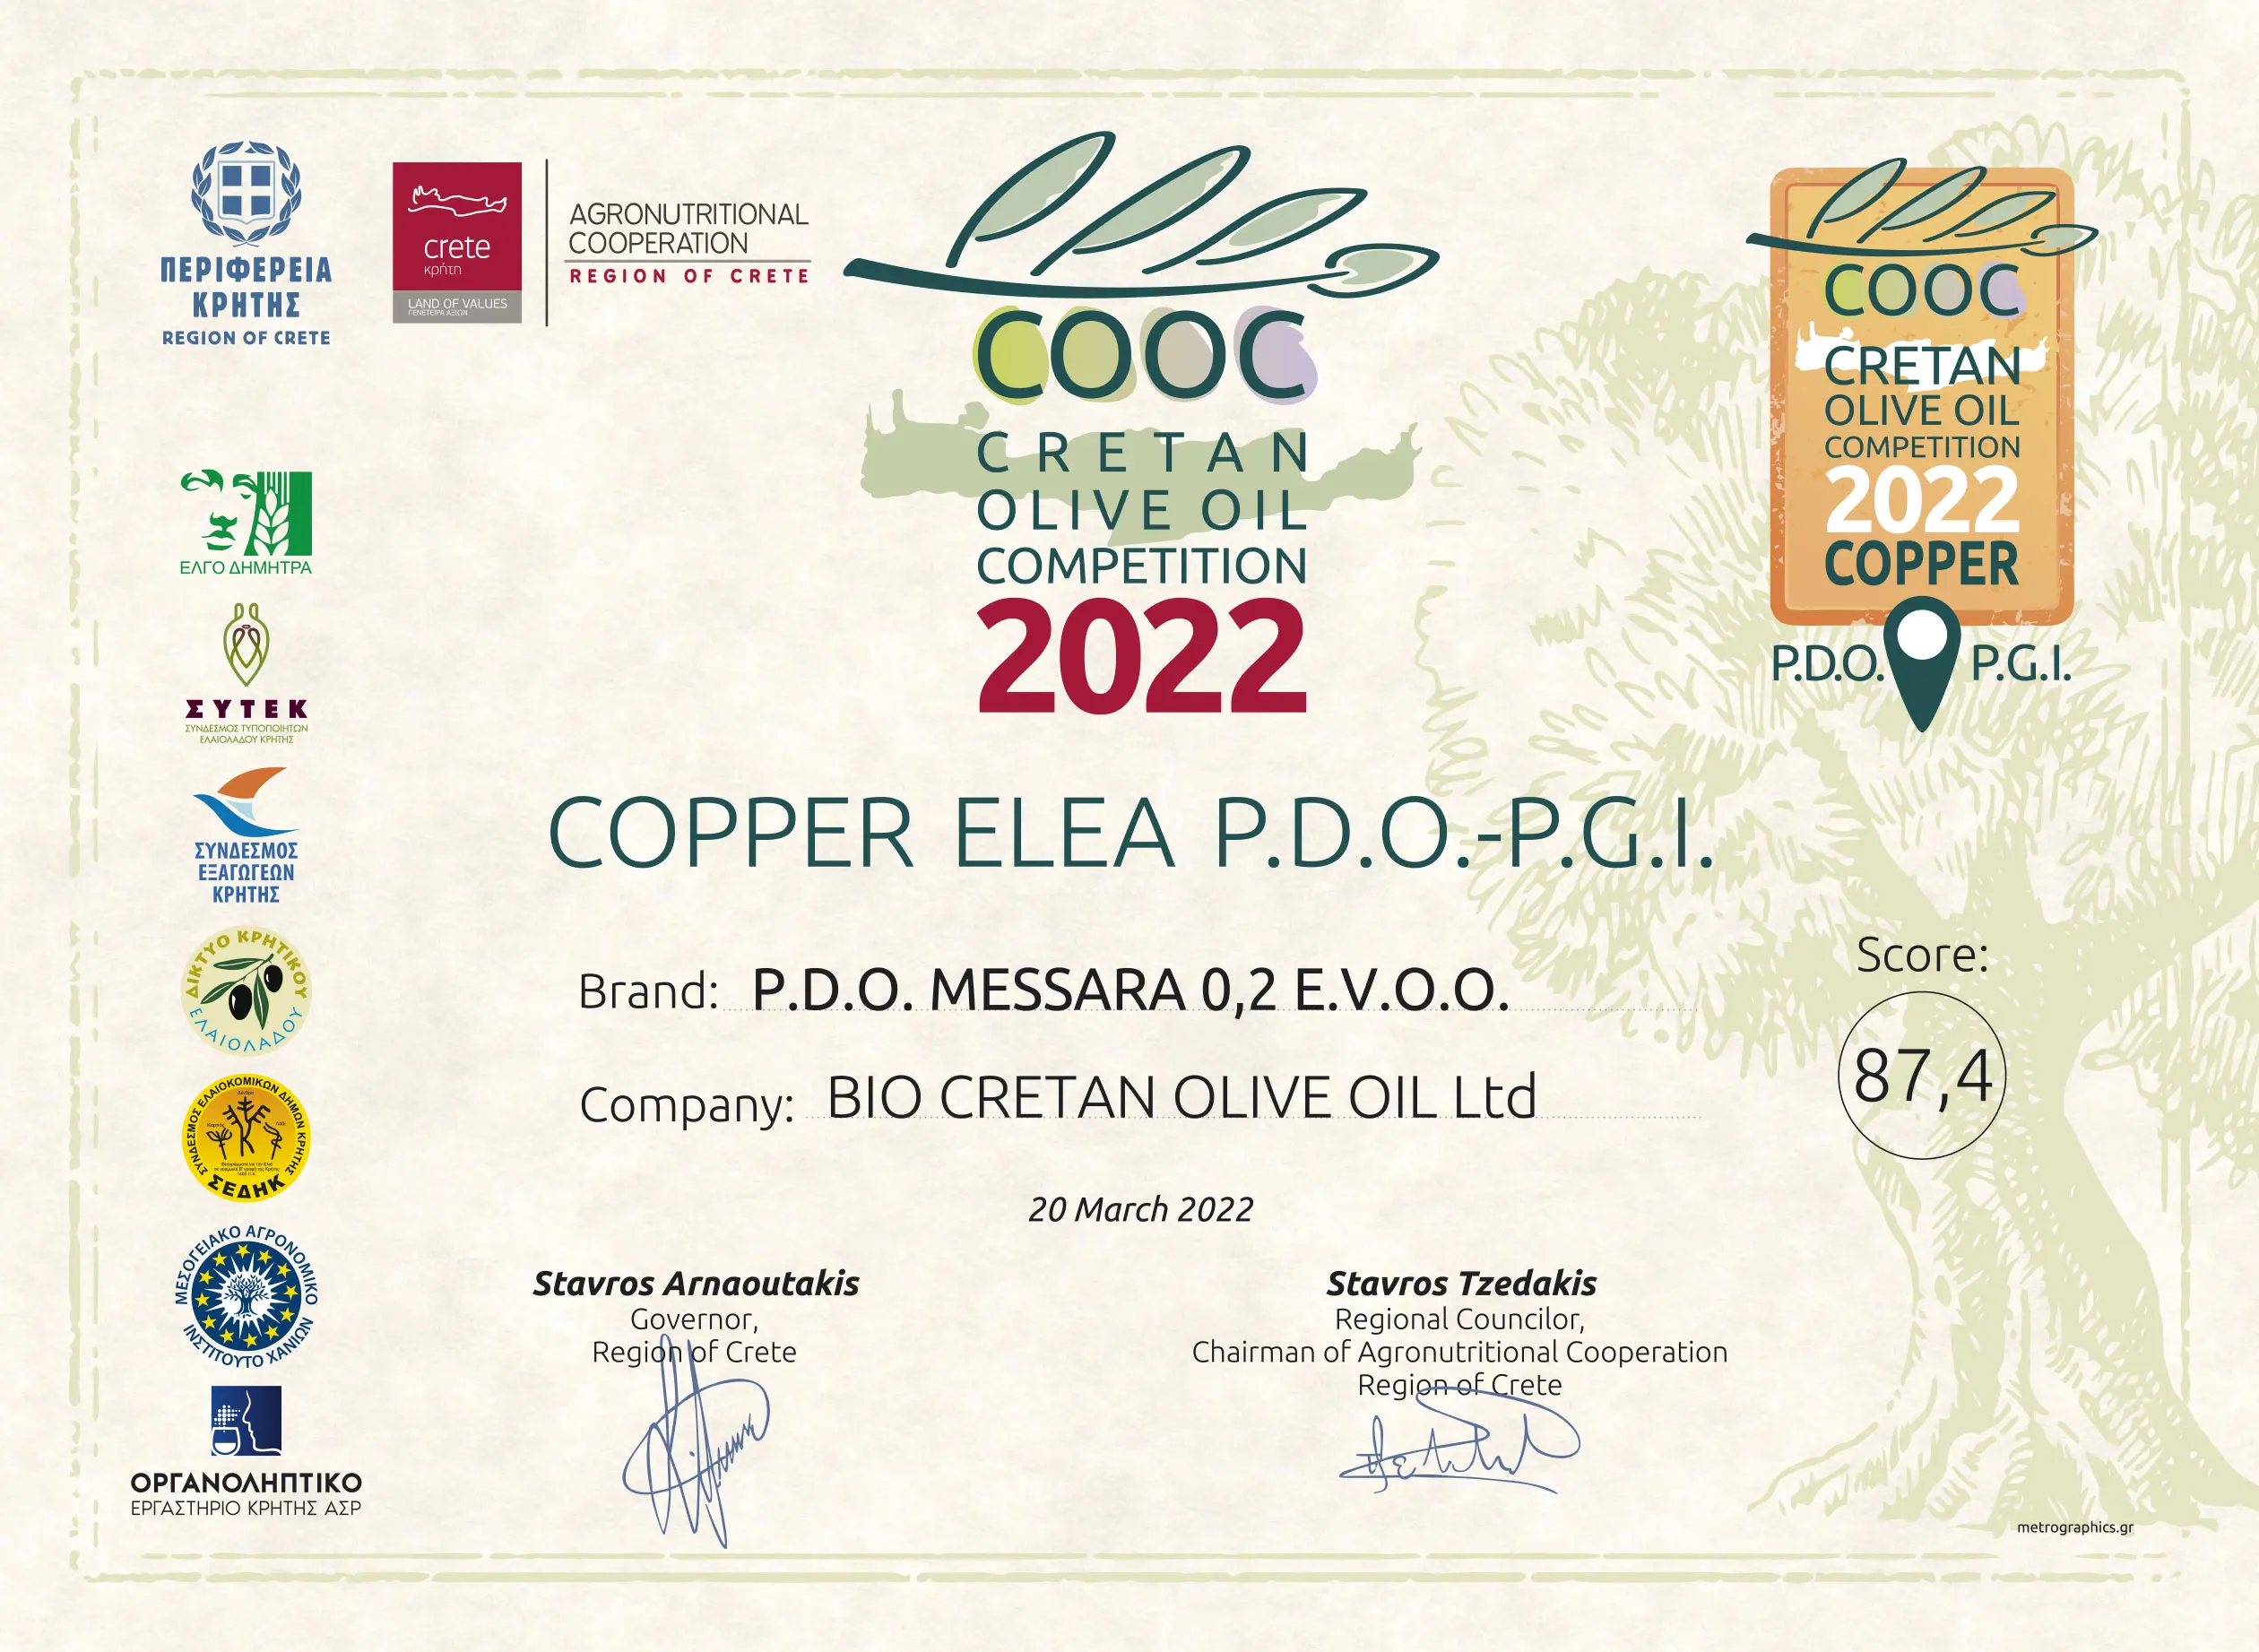 COOC - kretensisk olivenolie konkurrence